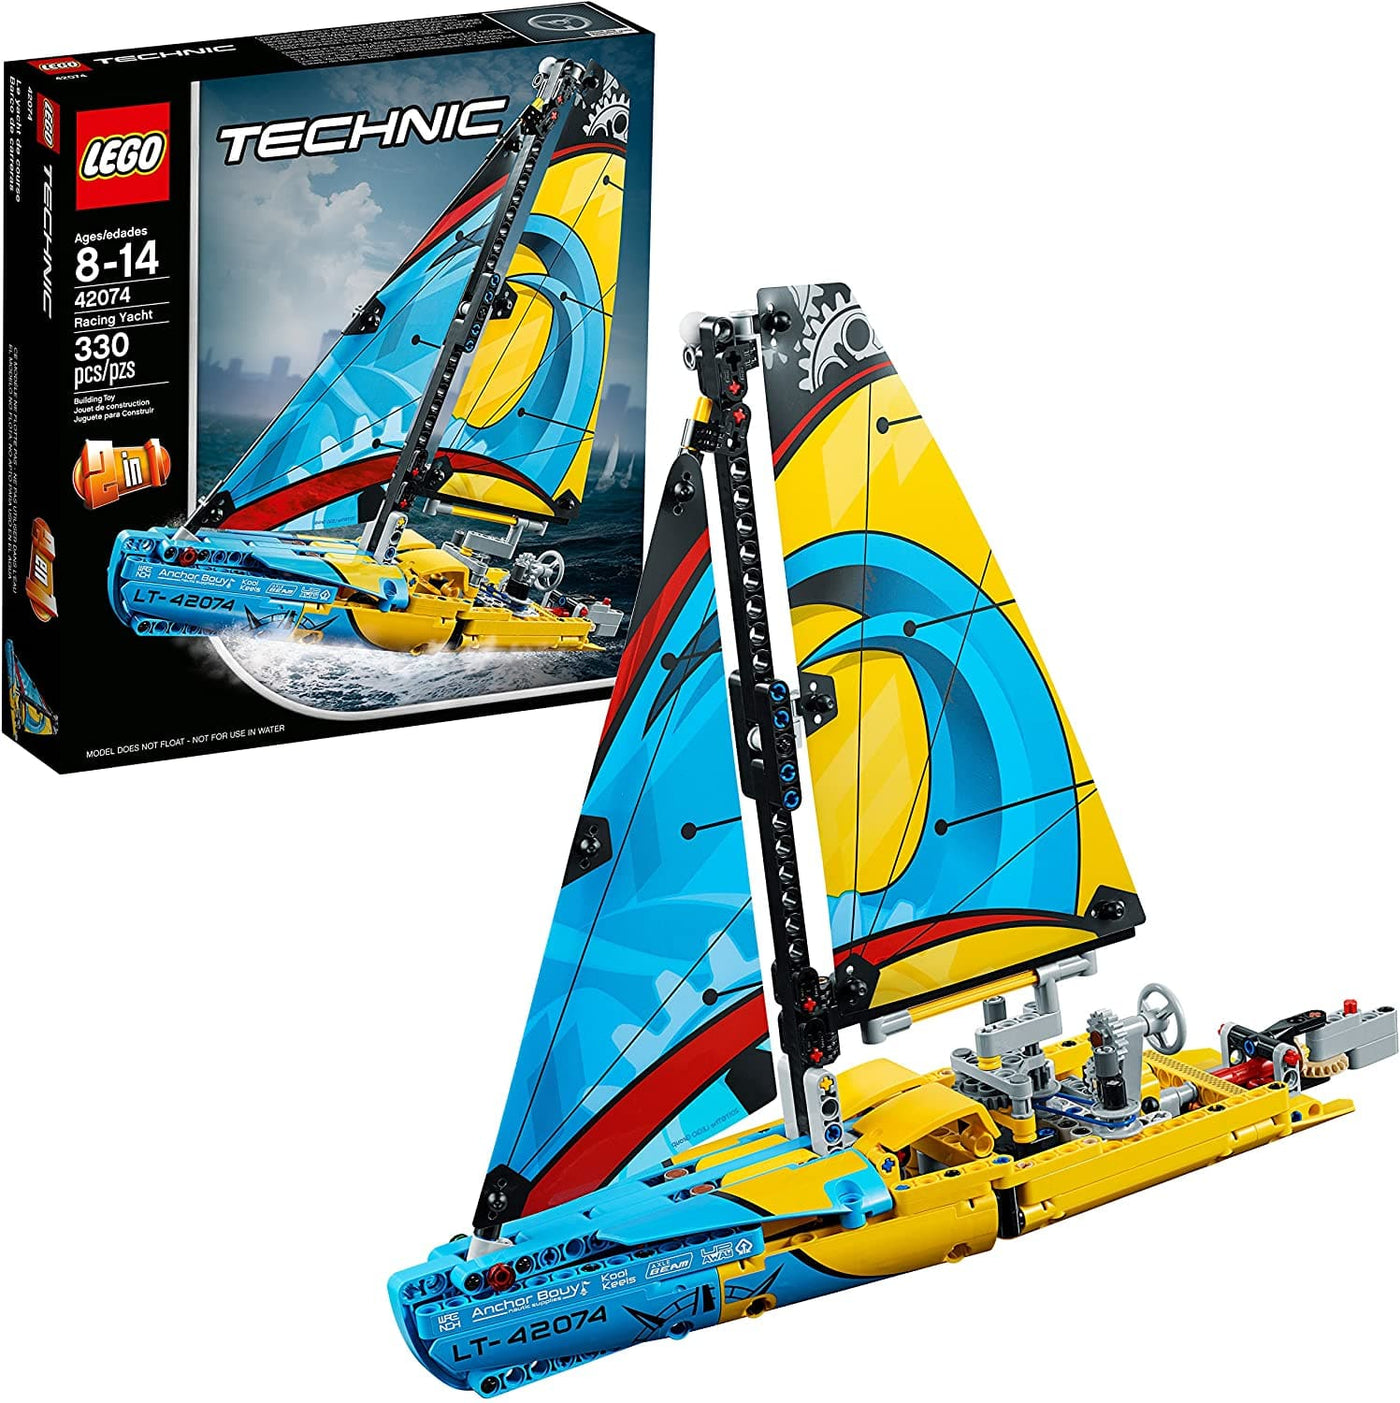 Technic Racing Yacht 42074 (Pcs 330) by LEGO, Denmark Toy